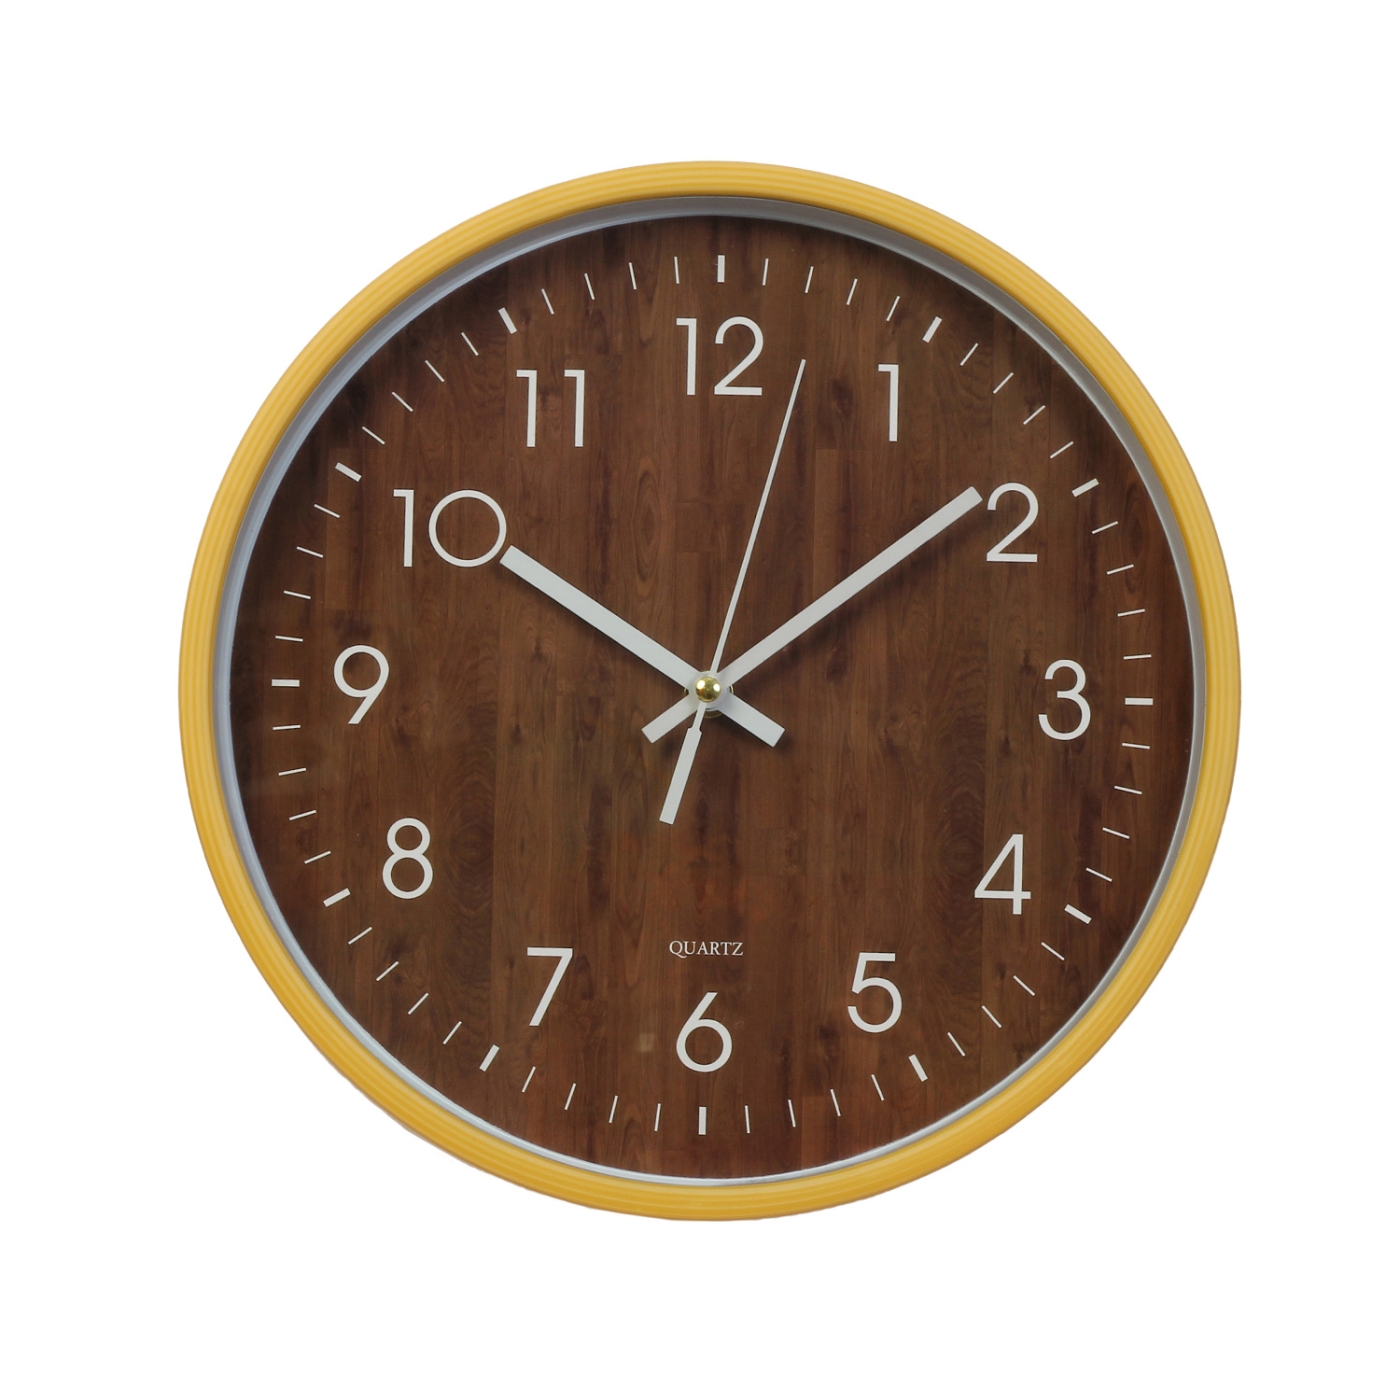 ORKA HOME Quartz Wood Finish Round Wall Clock - Brown  